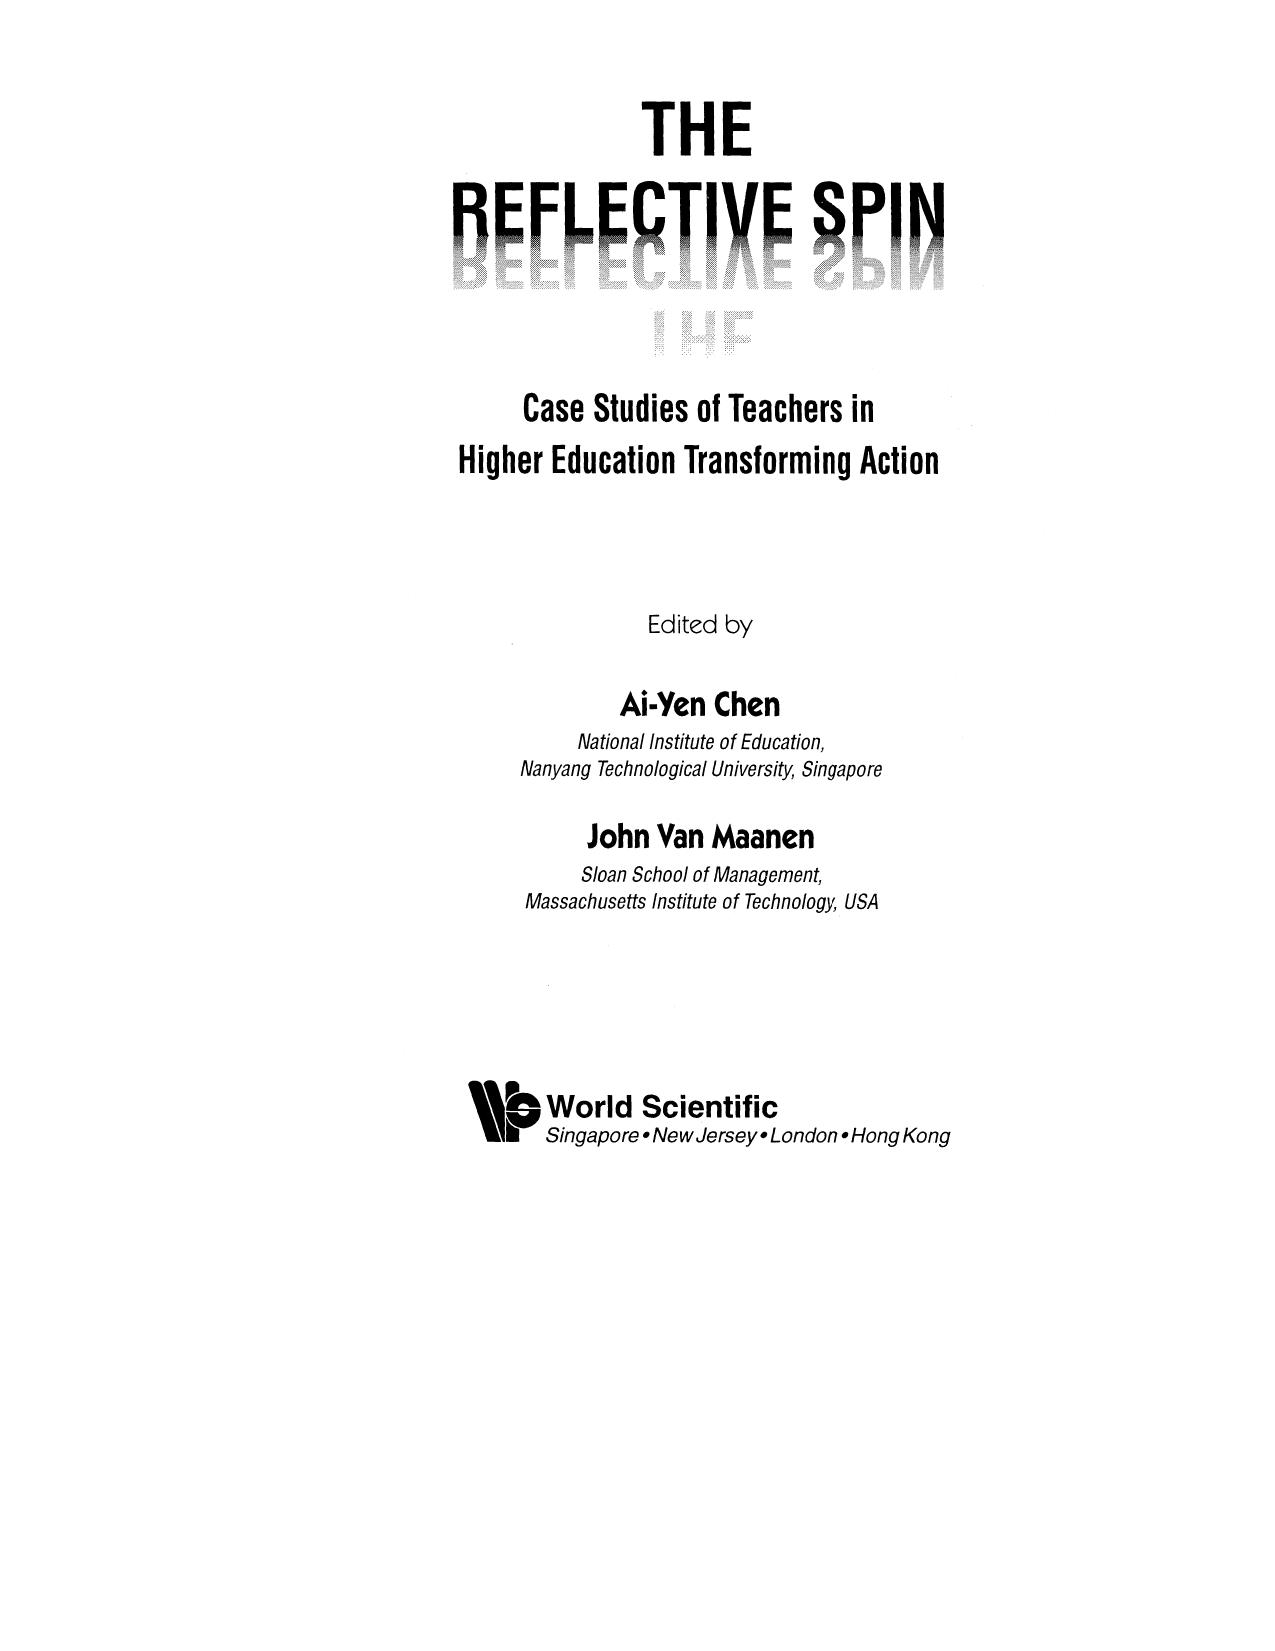 Reflective Spin, The: Case Studies Of Teachers In Higher Education Transforming Action by Ai Yen Chen; John Van Maanen